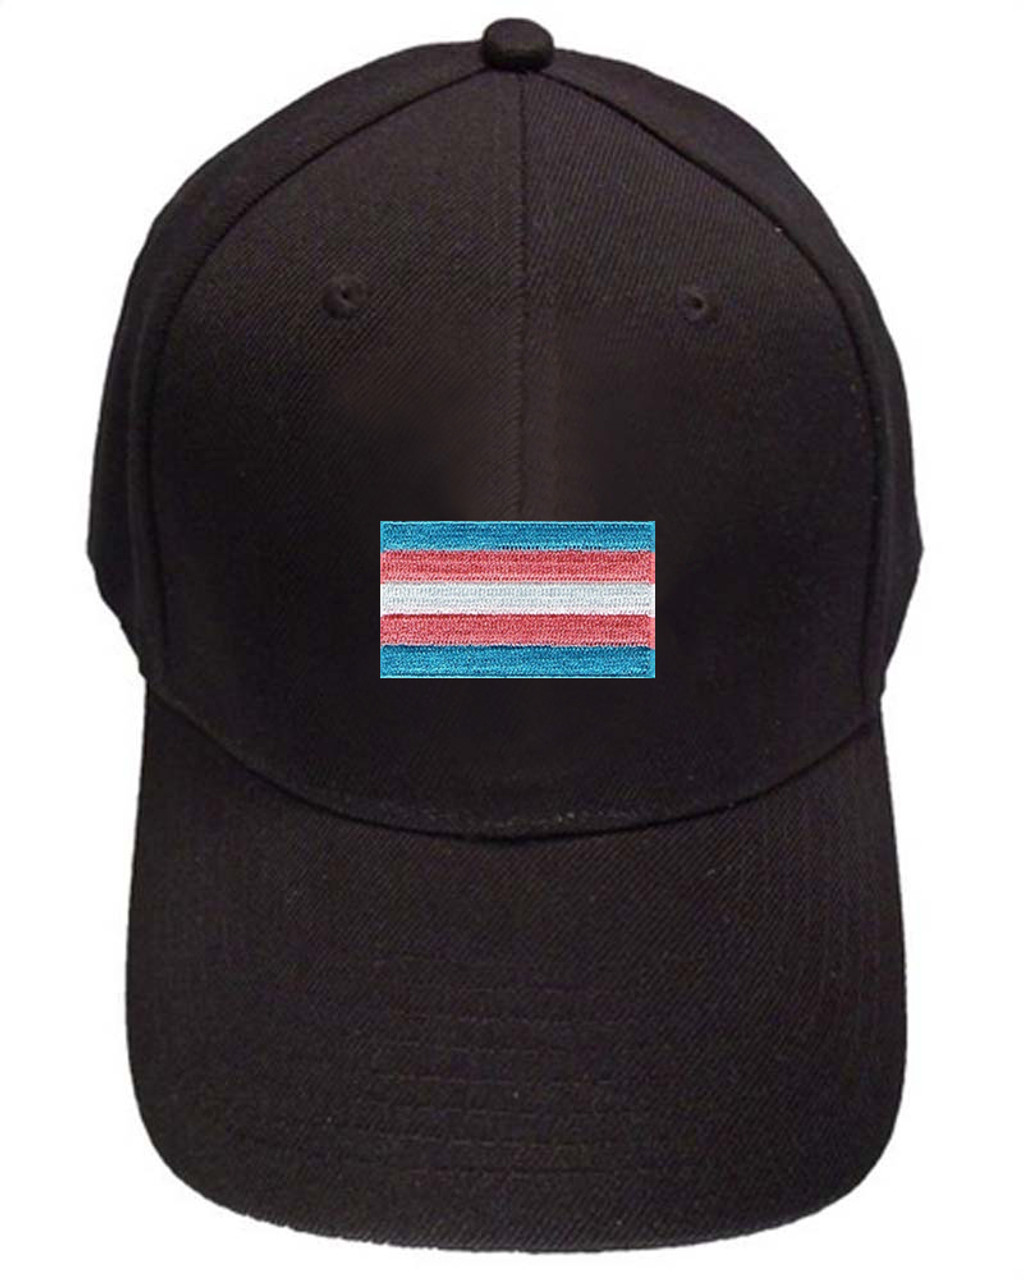 black Baseball Cap with LGBT Transgender Flag - LGBT Trans Pride Hat. LGBT Gay and Lesbian Pride Clothing & Apparel , transgender flag hat, trans pride hat, 